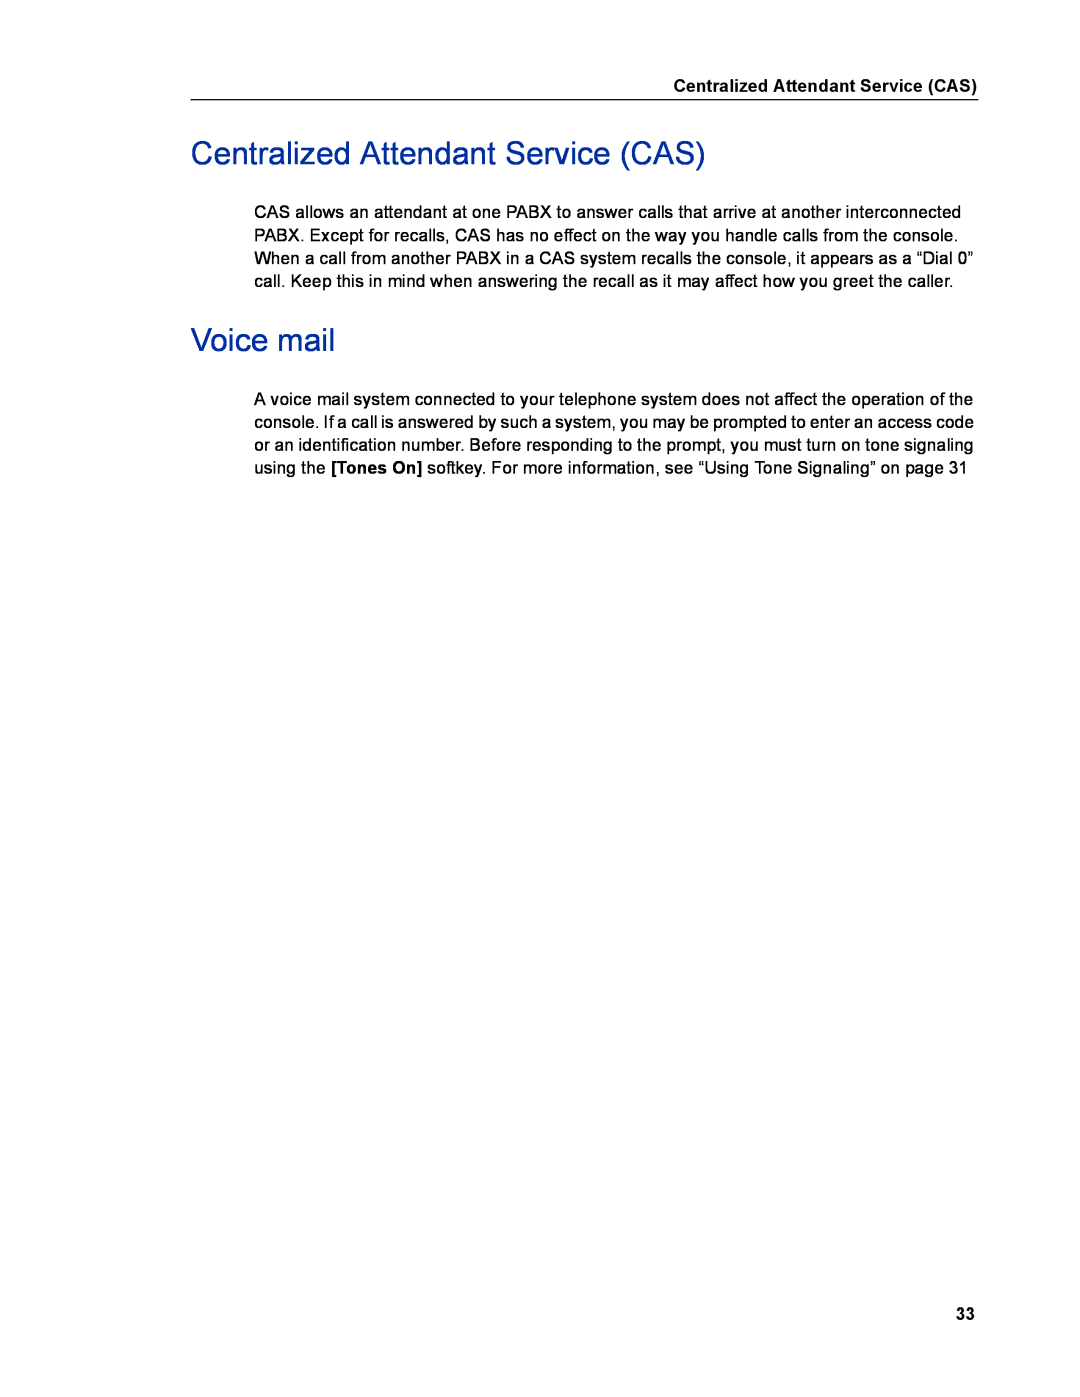 Mitel 5540 manual Centralized Attendant Service CAS, Voice mail 